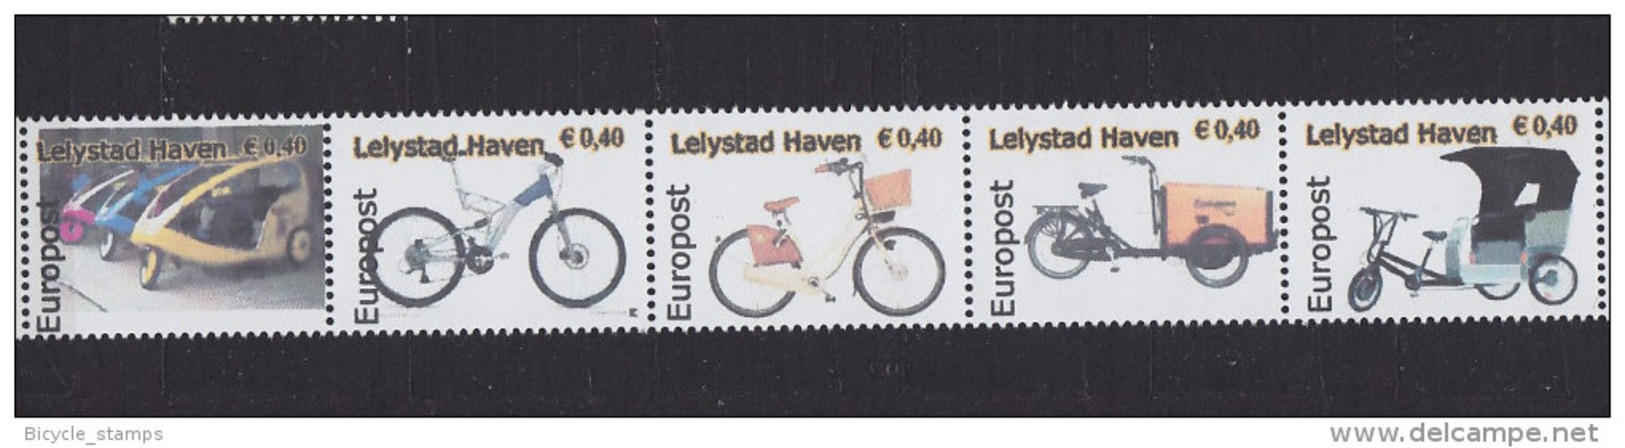 2011 PAYS-BAS Netherlands STADSPOST LELYSTAD HAVEN Europost ** MNH Vélo Cycliste Cyclisme Bicycle Cycling Fahrrad [de44] - Ciclismo